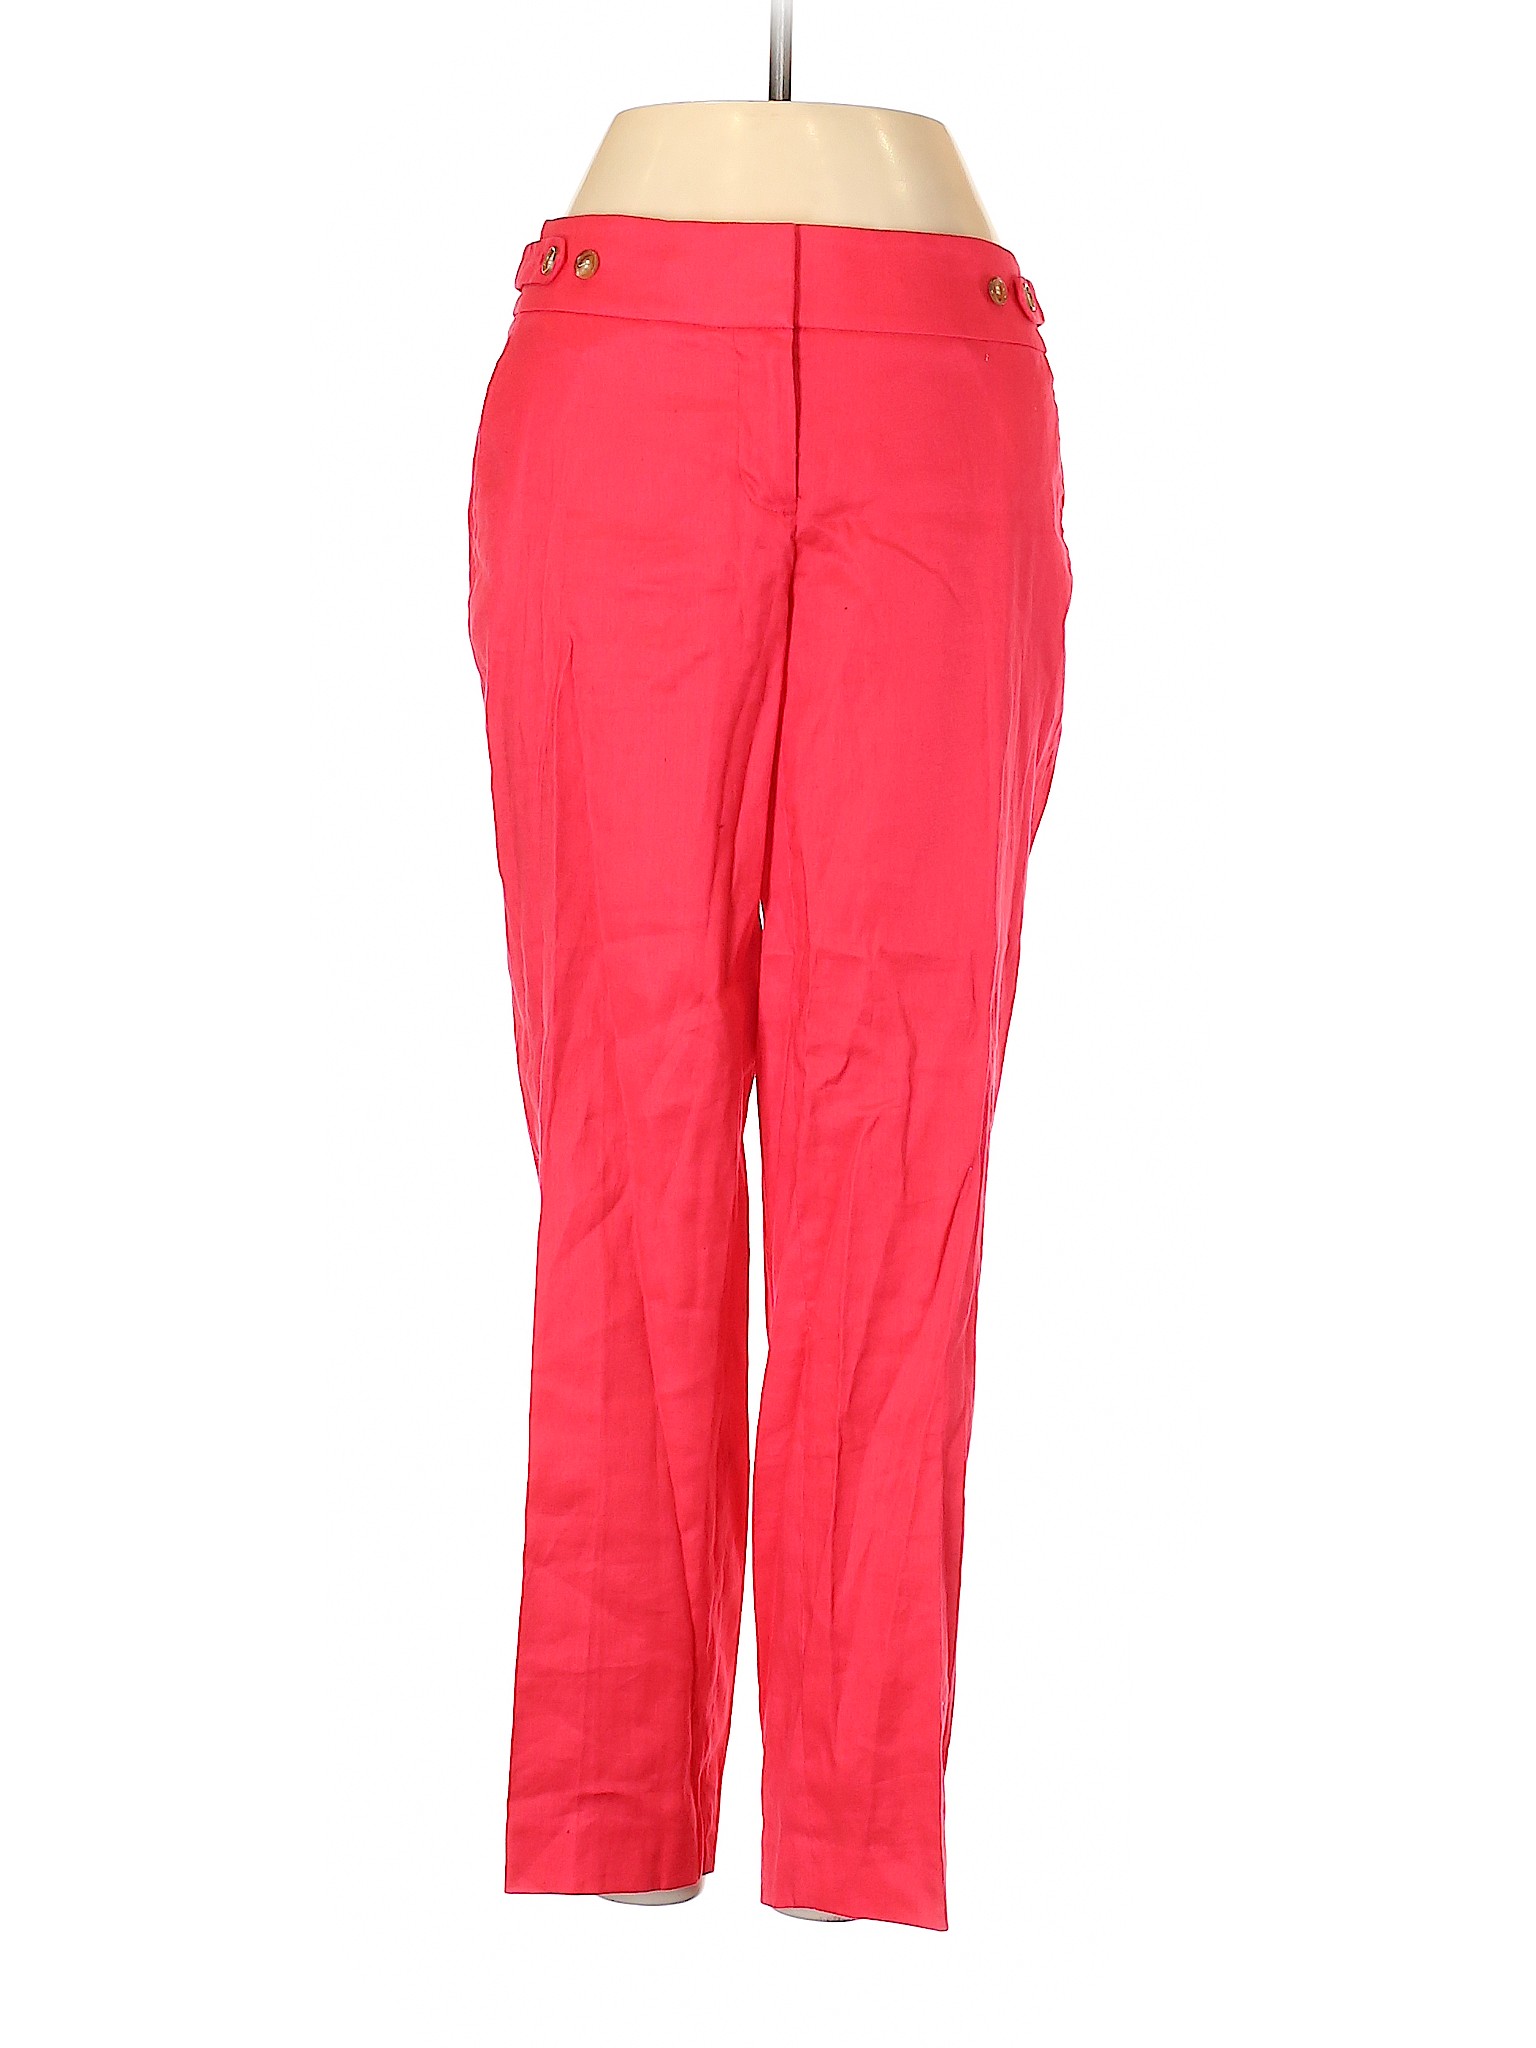 Ann Taylor LOFT Women Red Linen Pants 2 | eBay